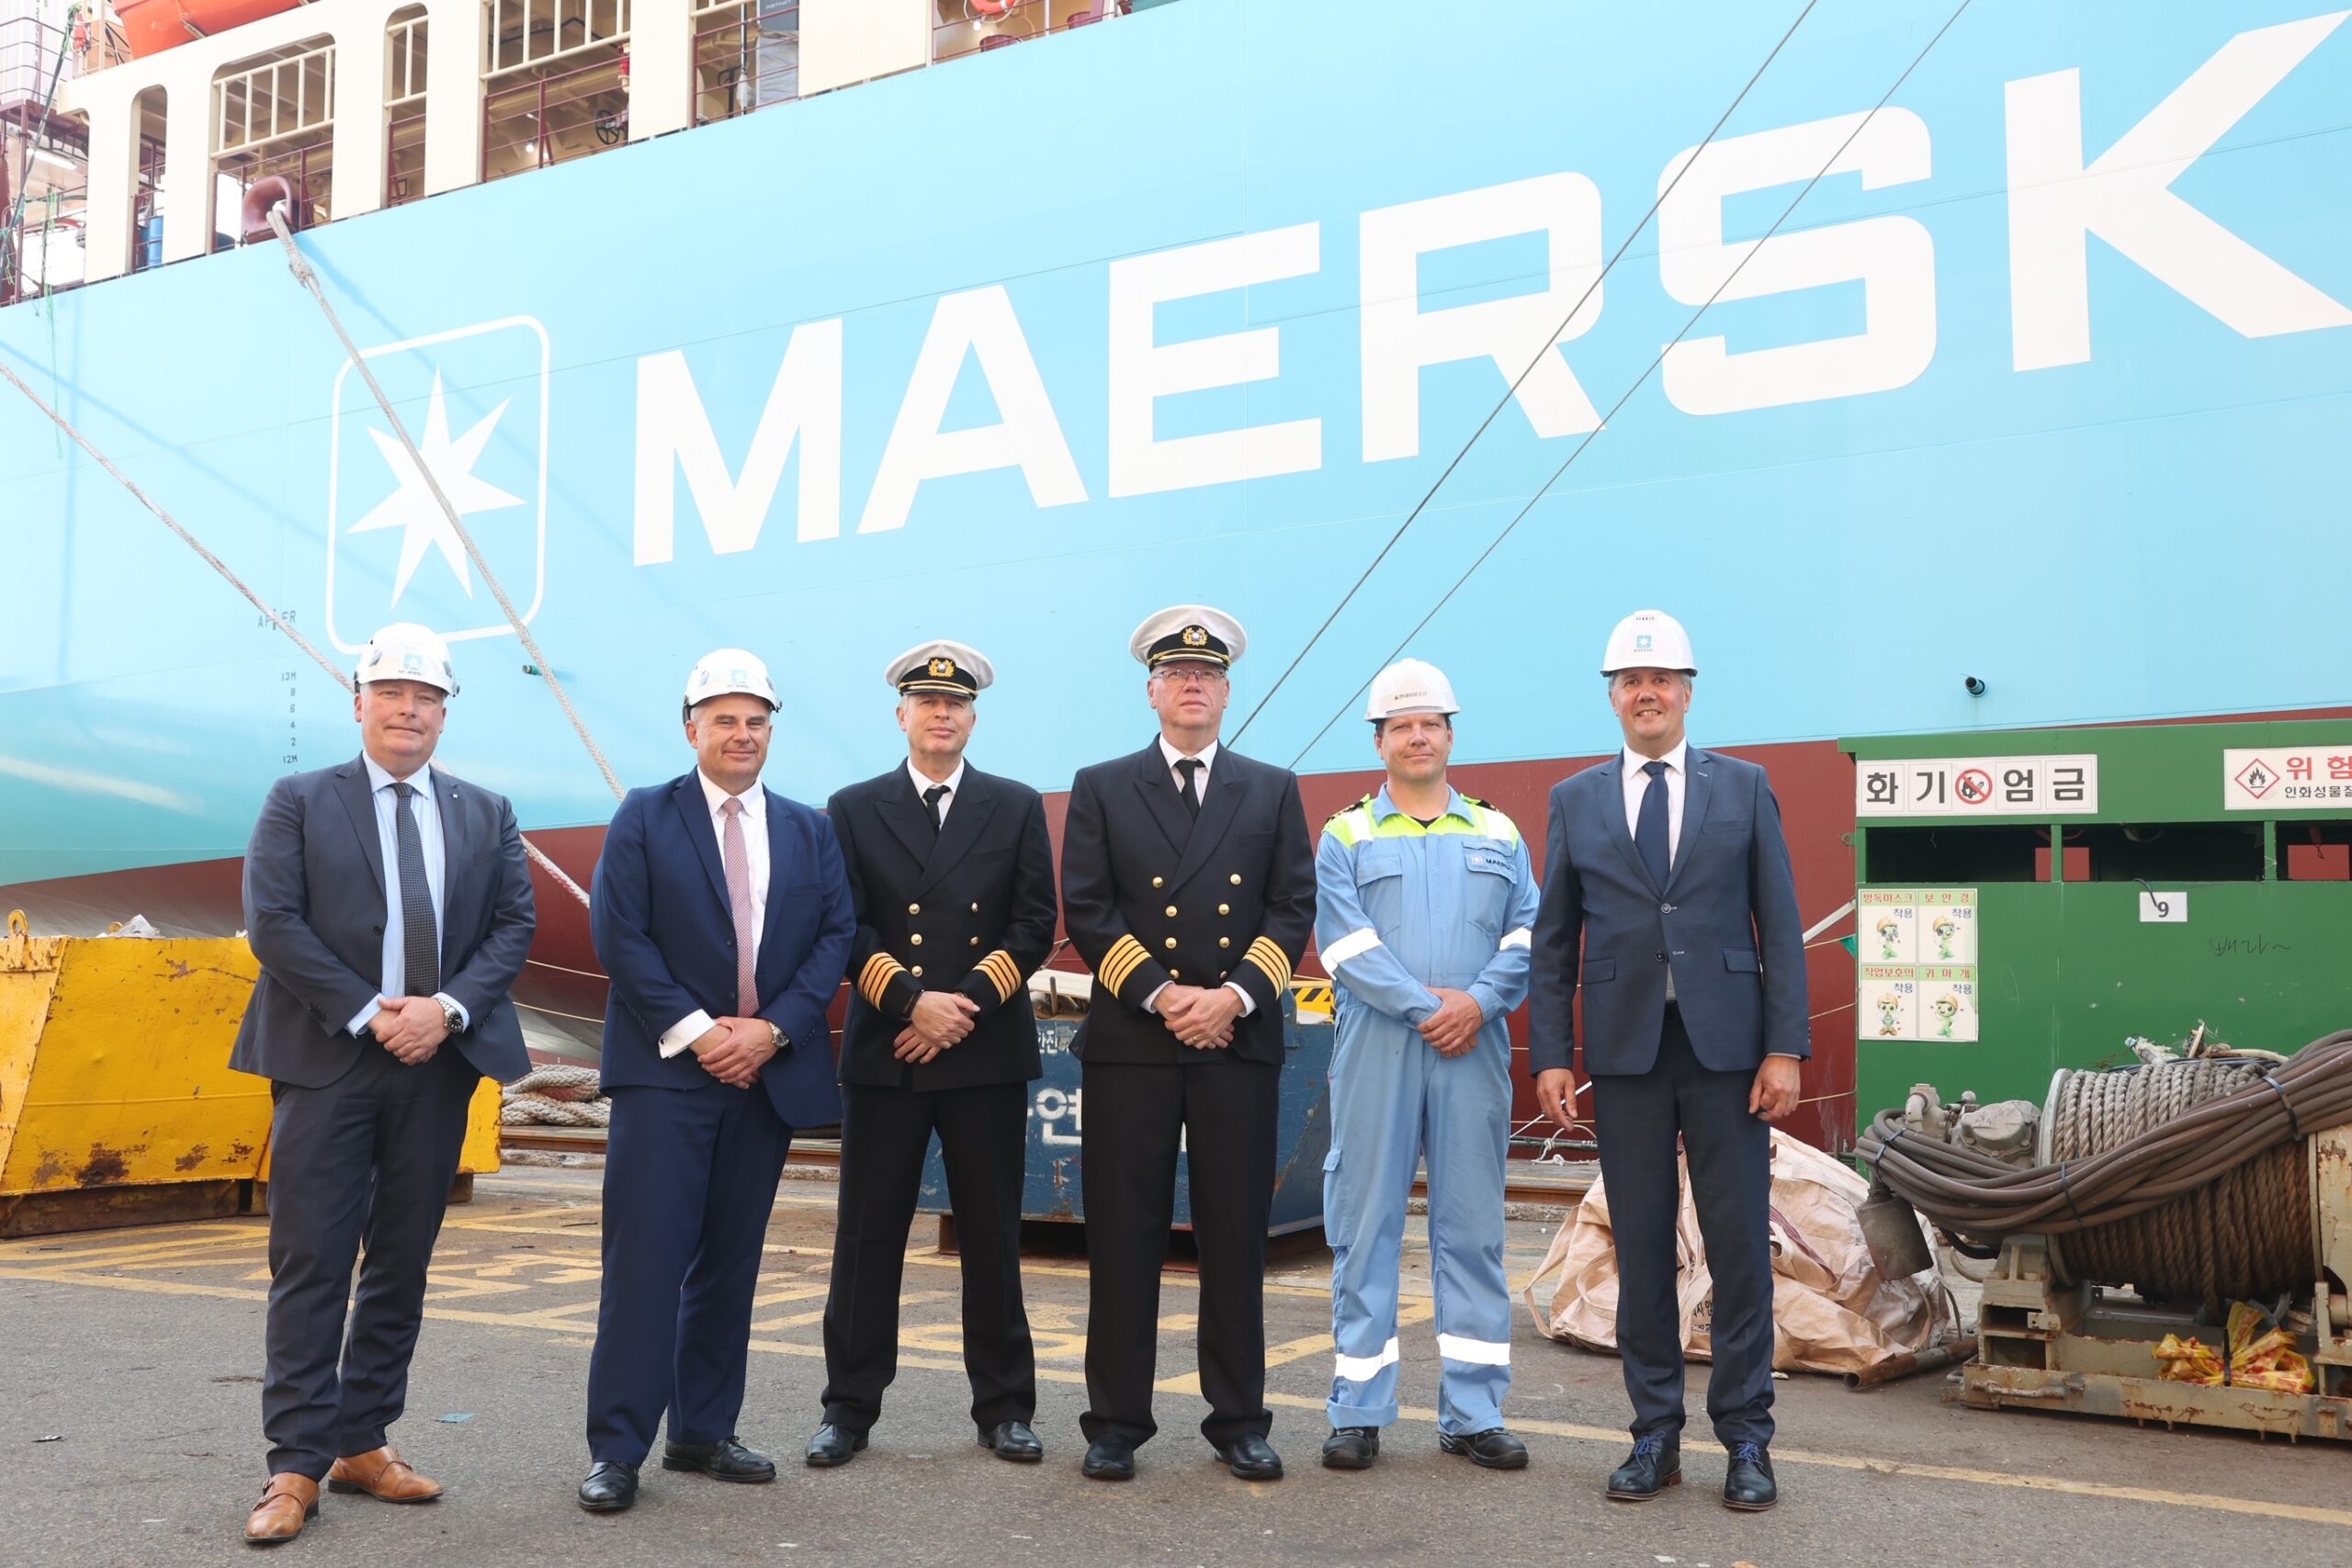 Maersk Methanol power